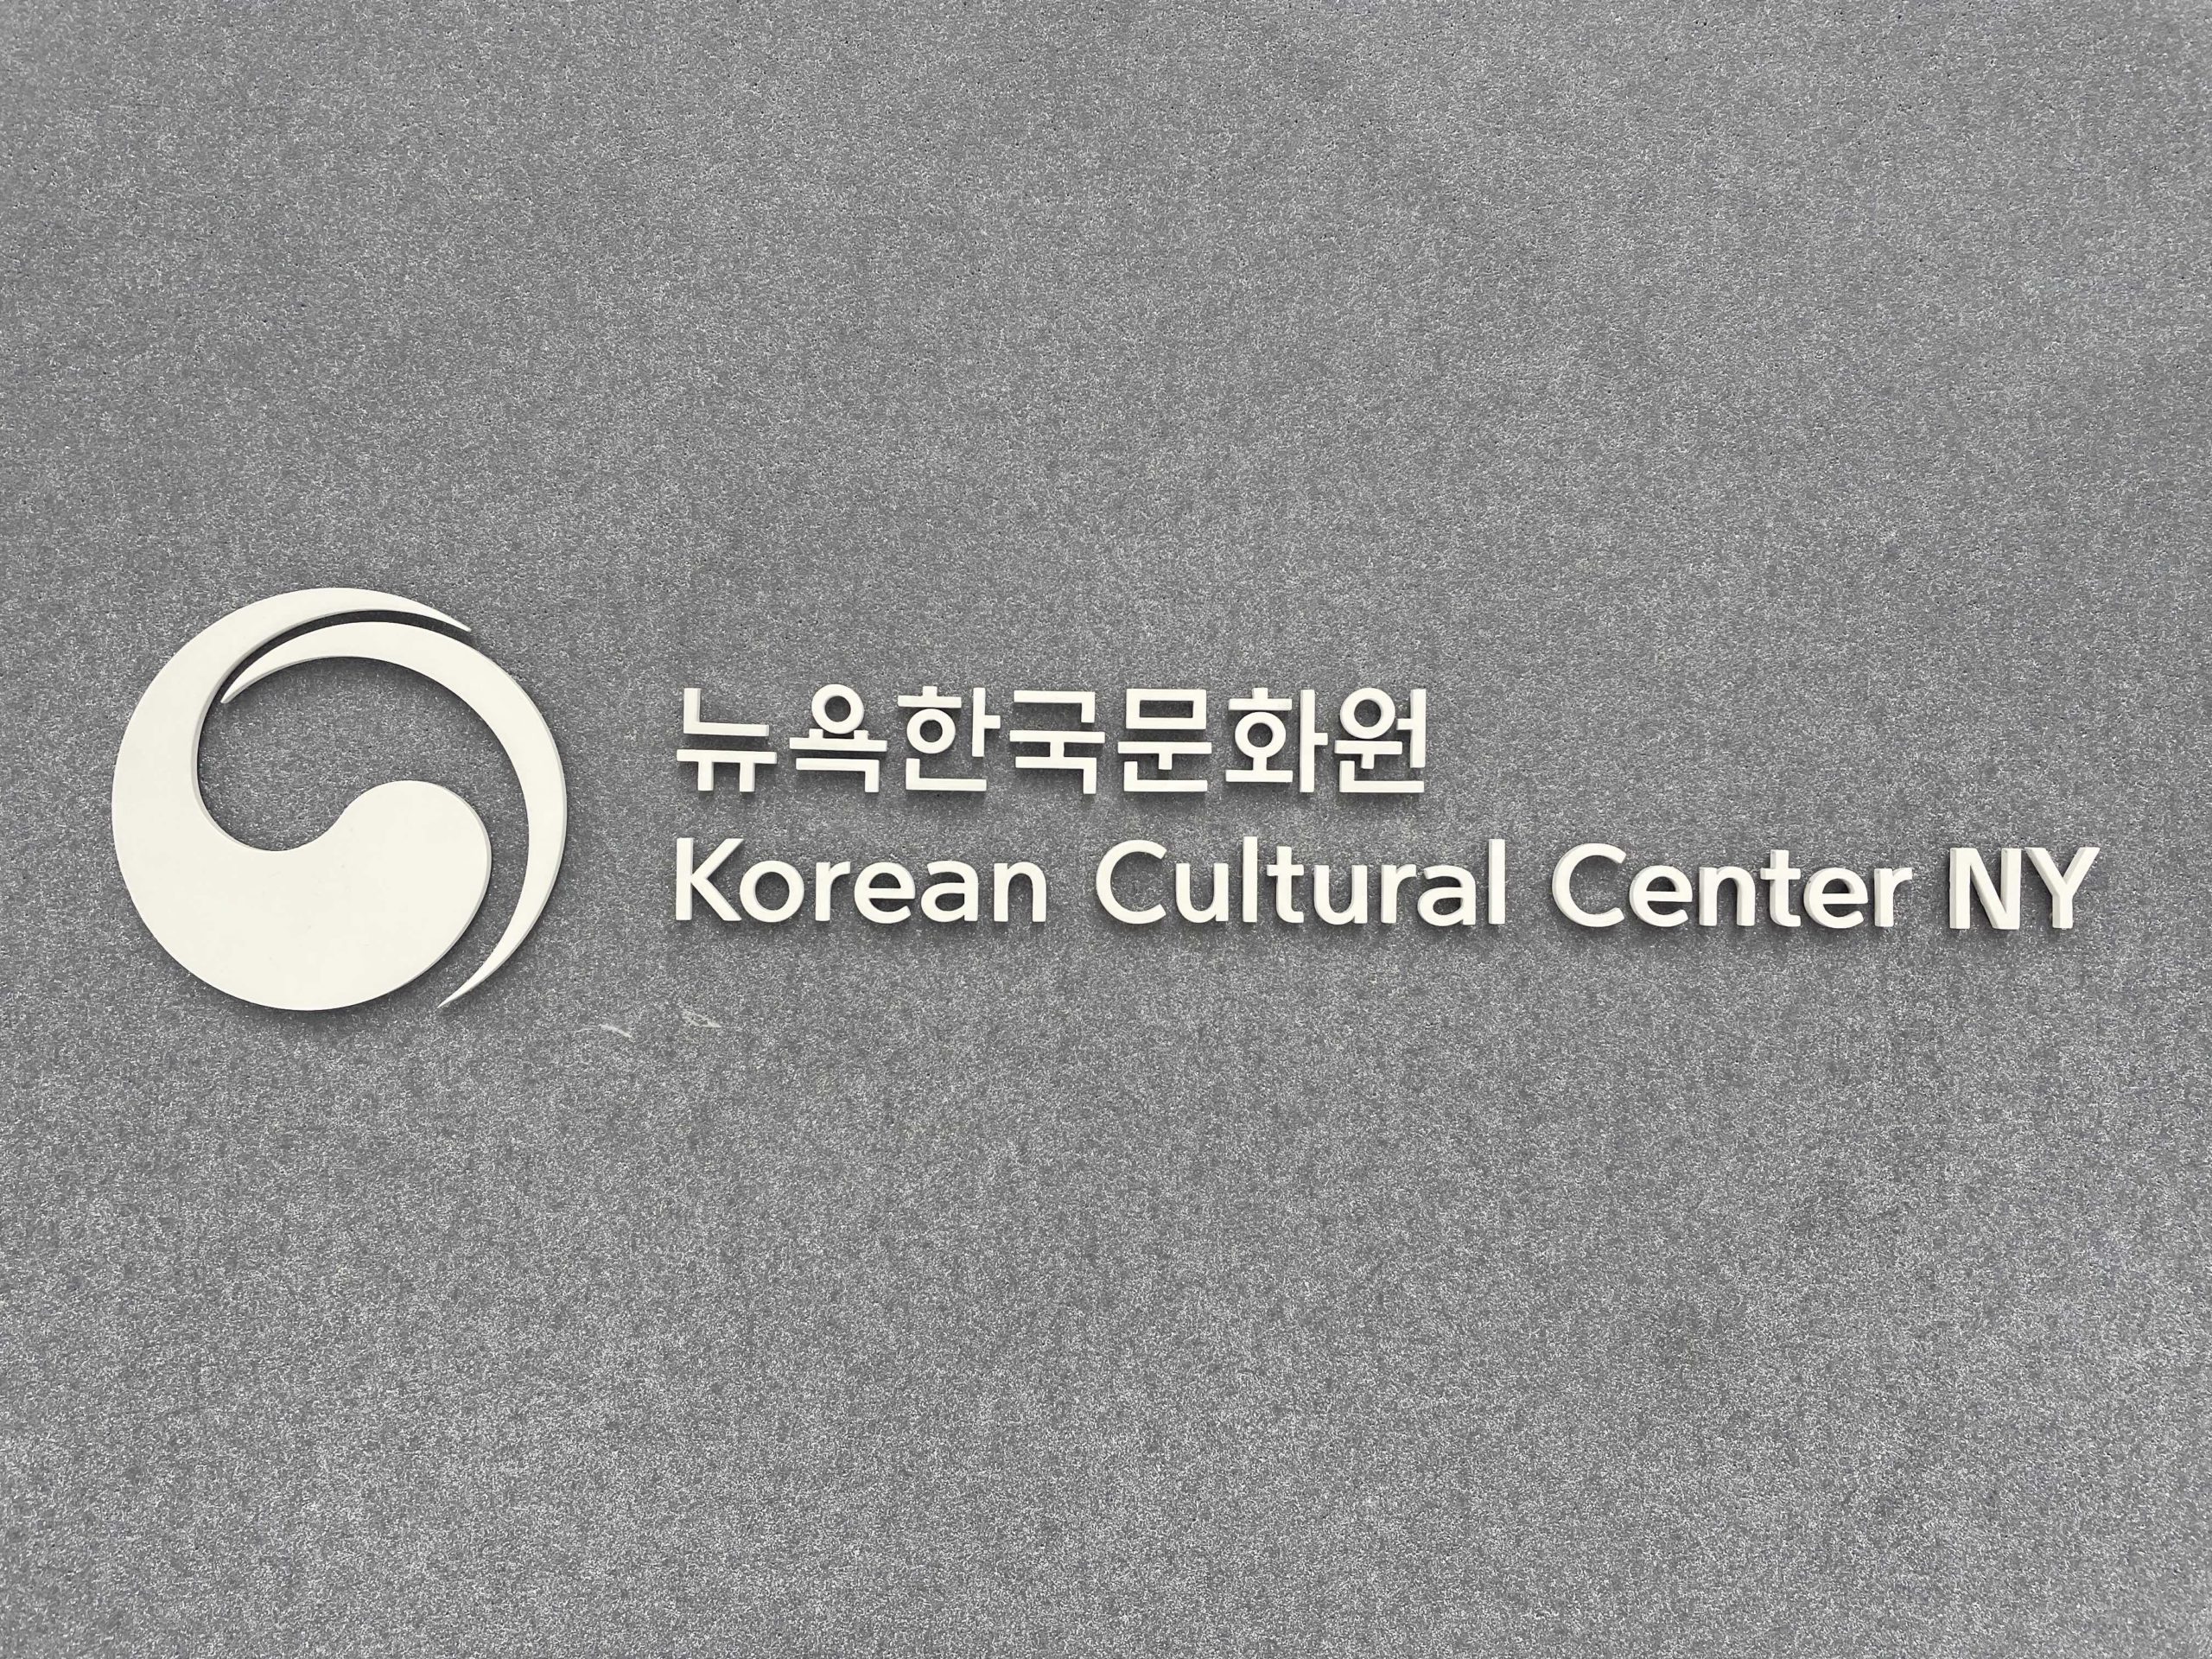 New Venue at Korean Cultural Center New York